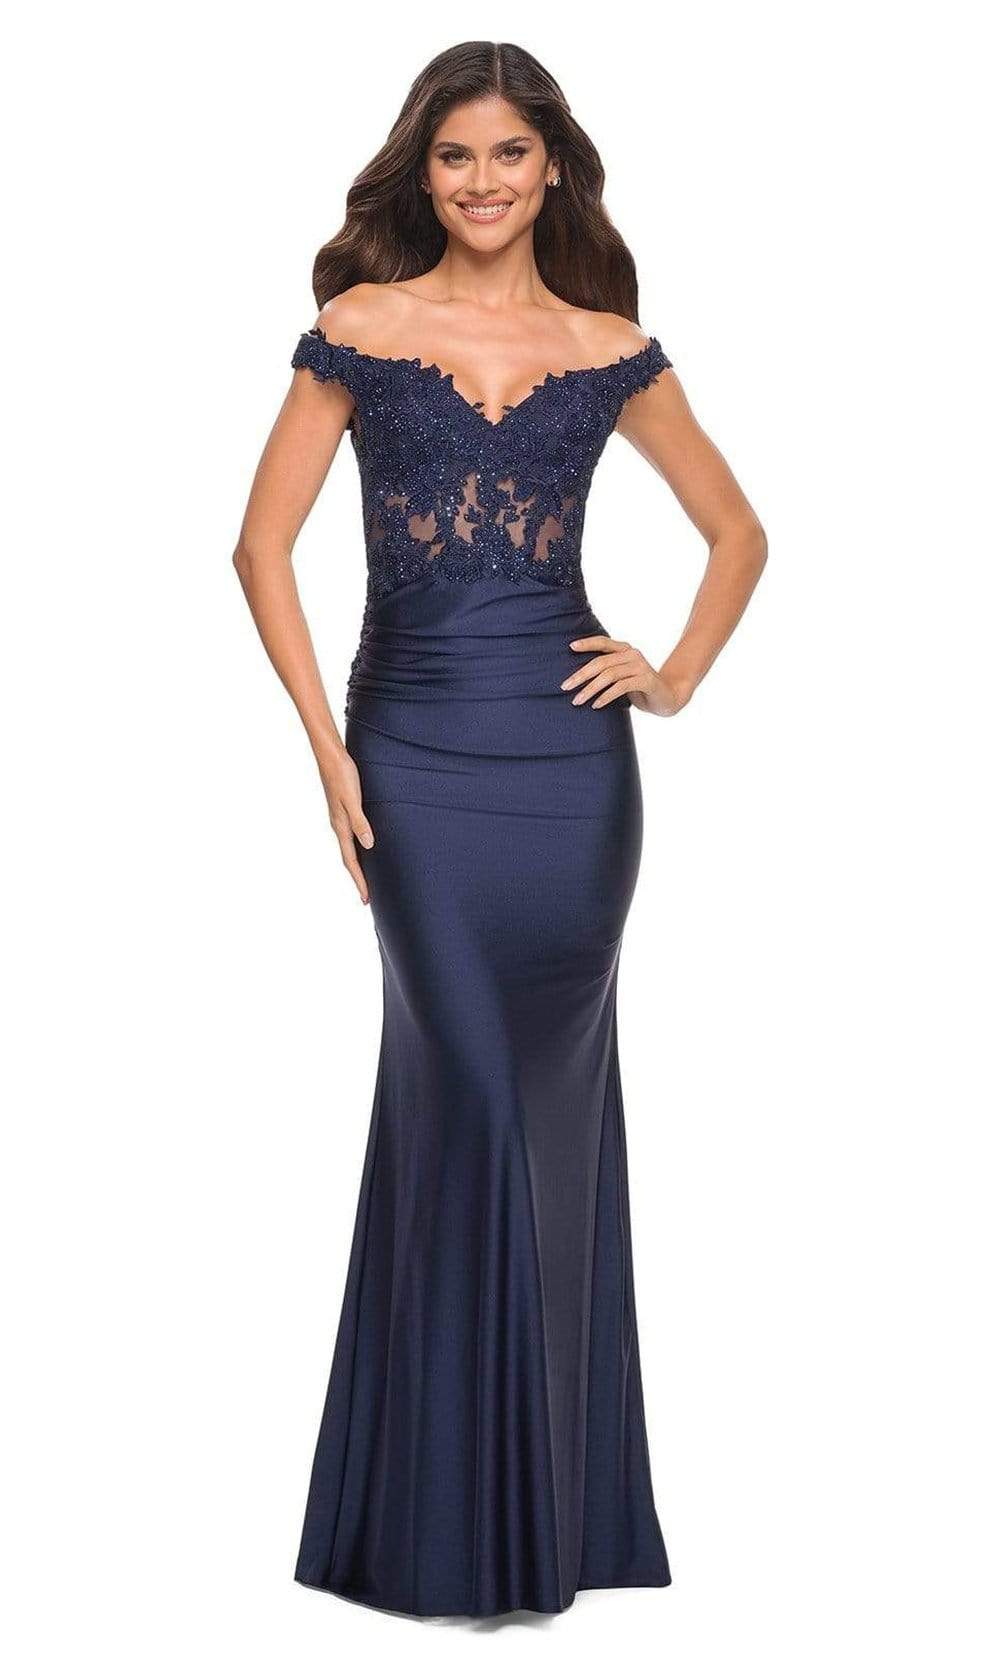 La Femme - 30741 Illusion Lace Top Long Dress Special Occasion Dress 00 / Navy